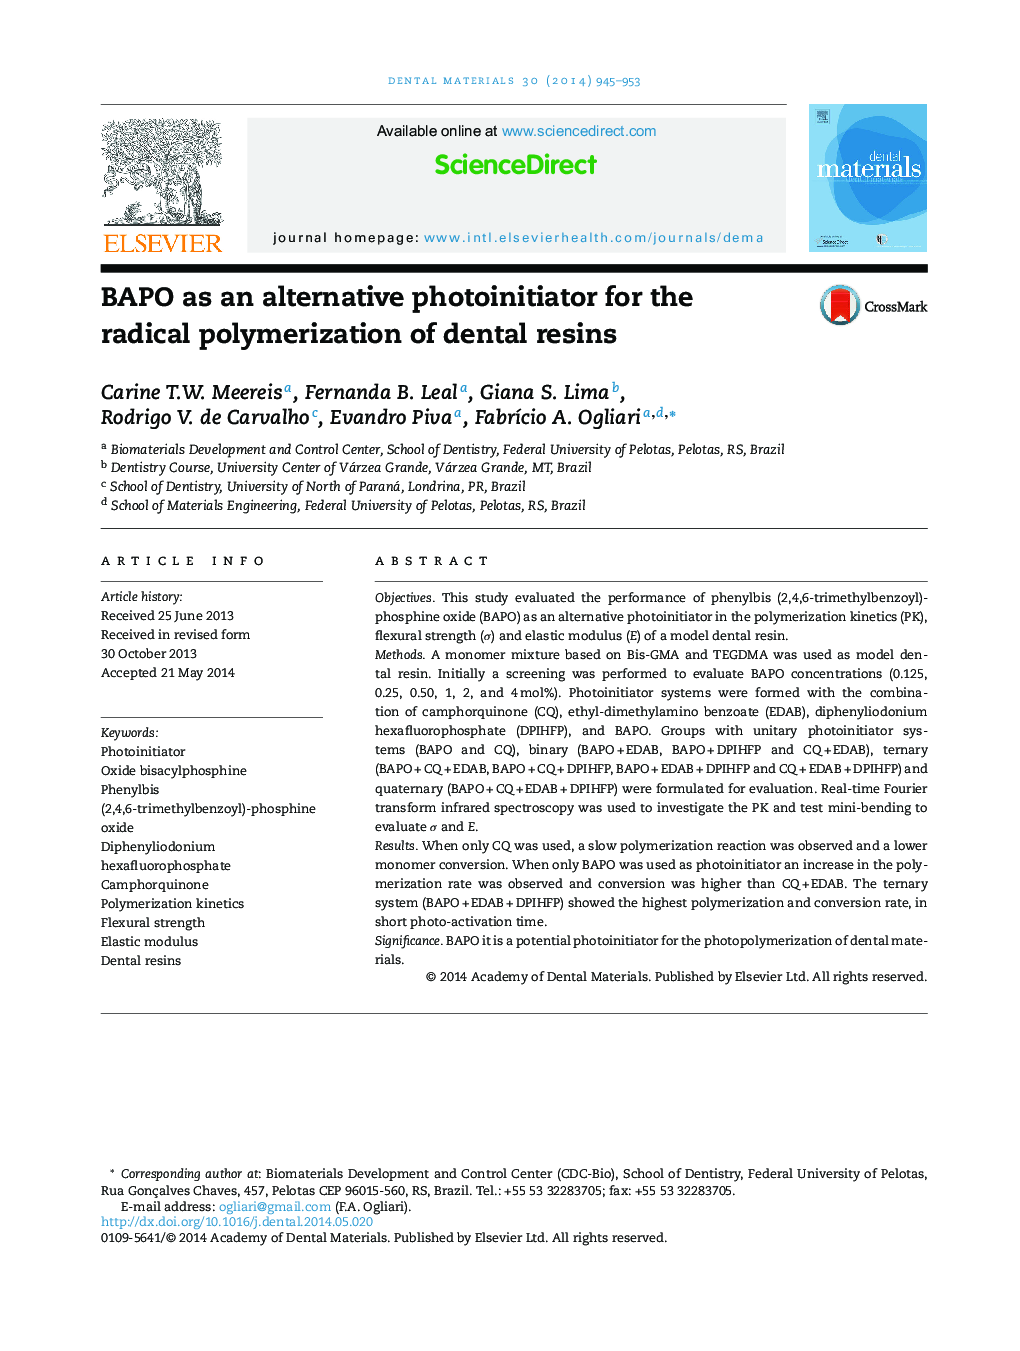 BAPO as an alternative photoinitiator for the radical polymerization of dental resins